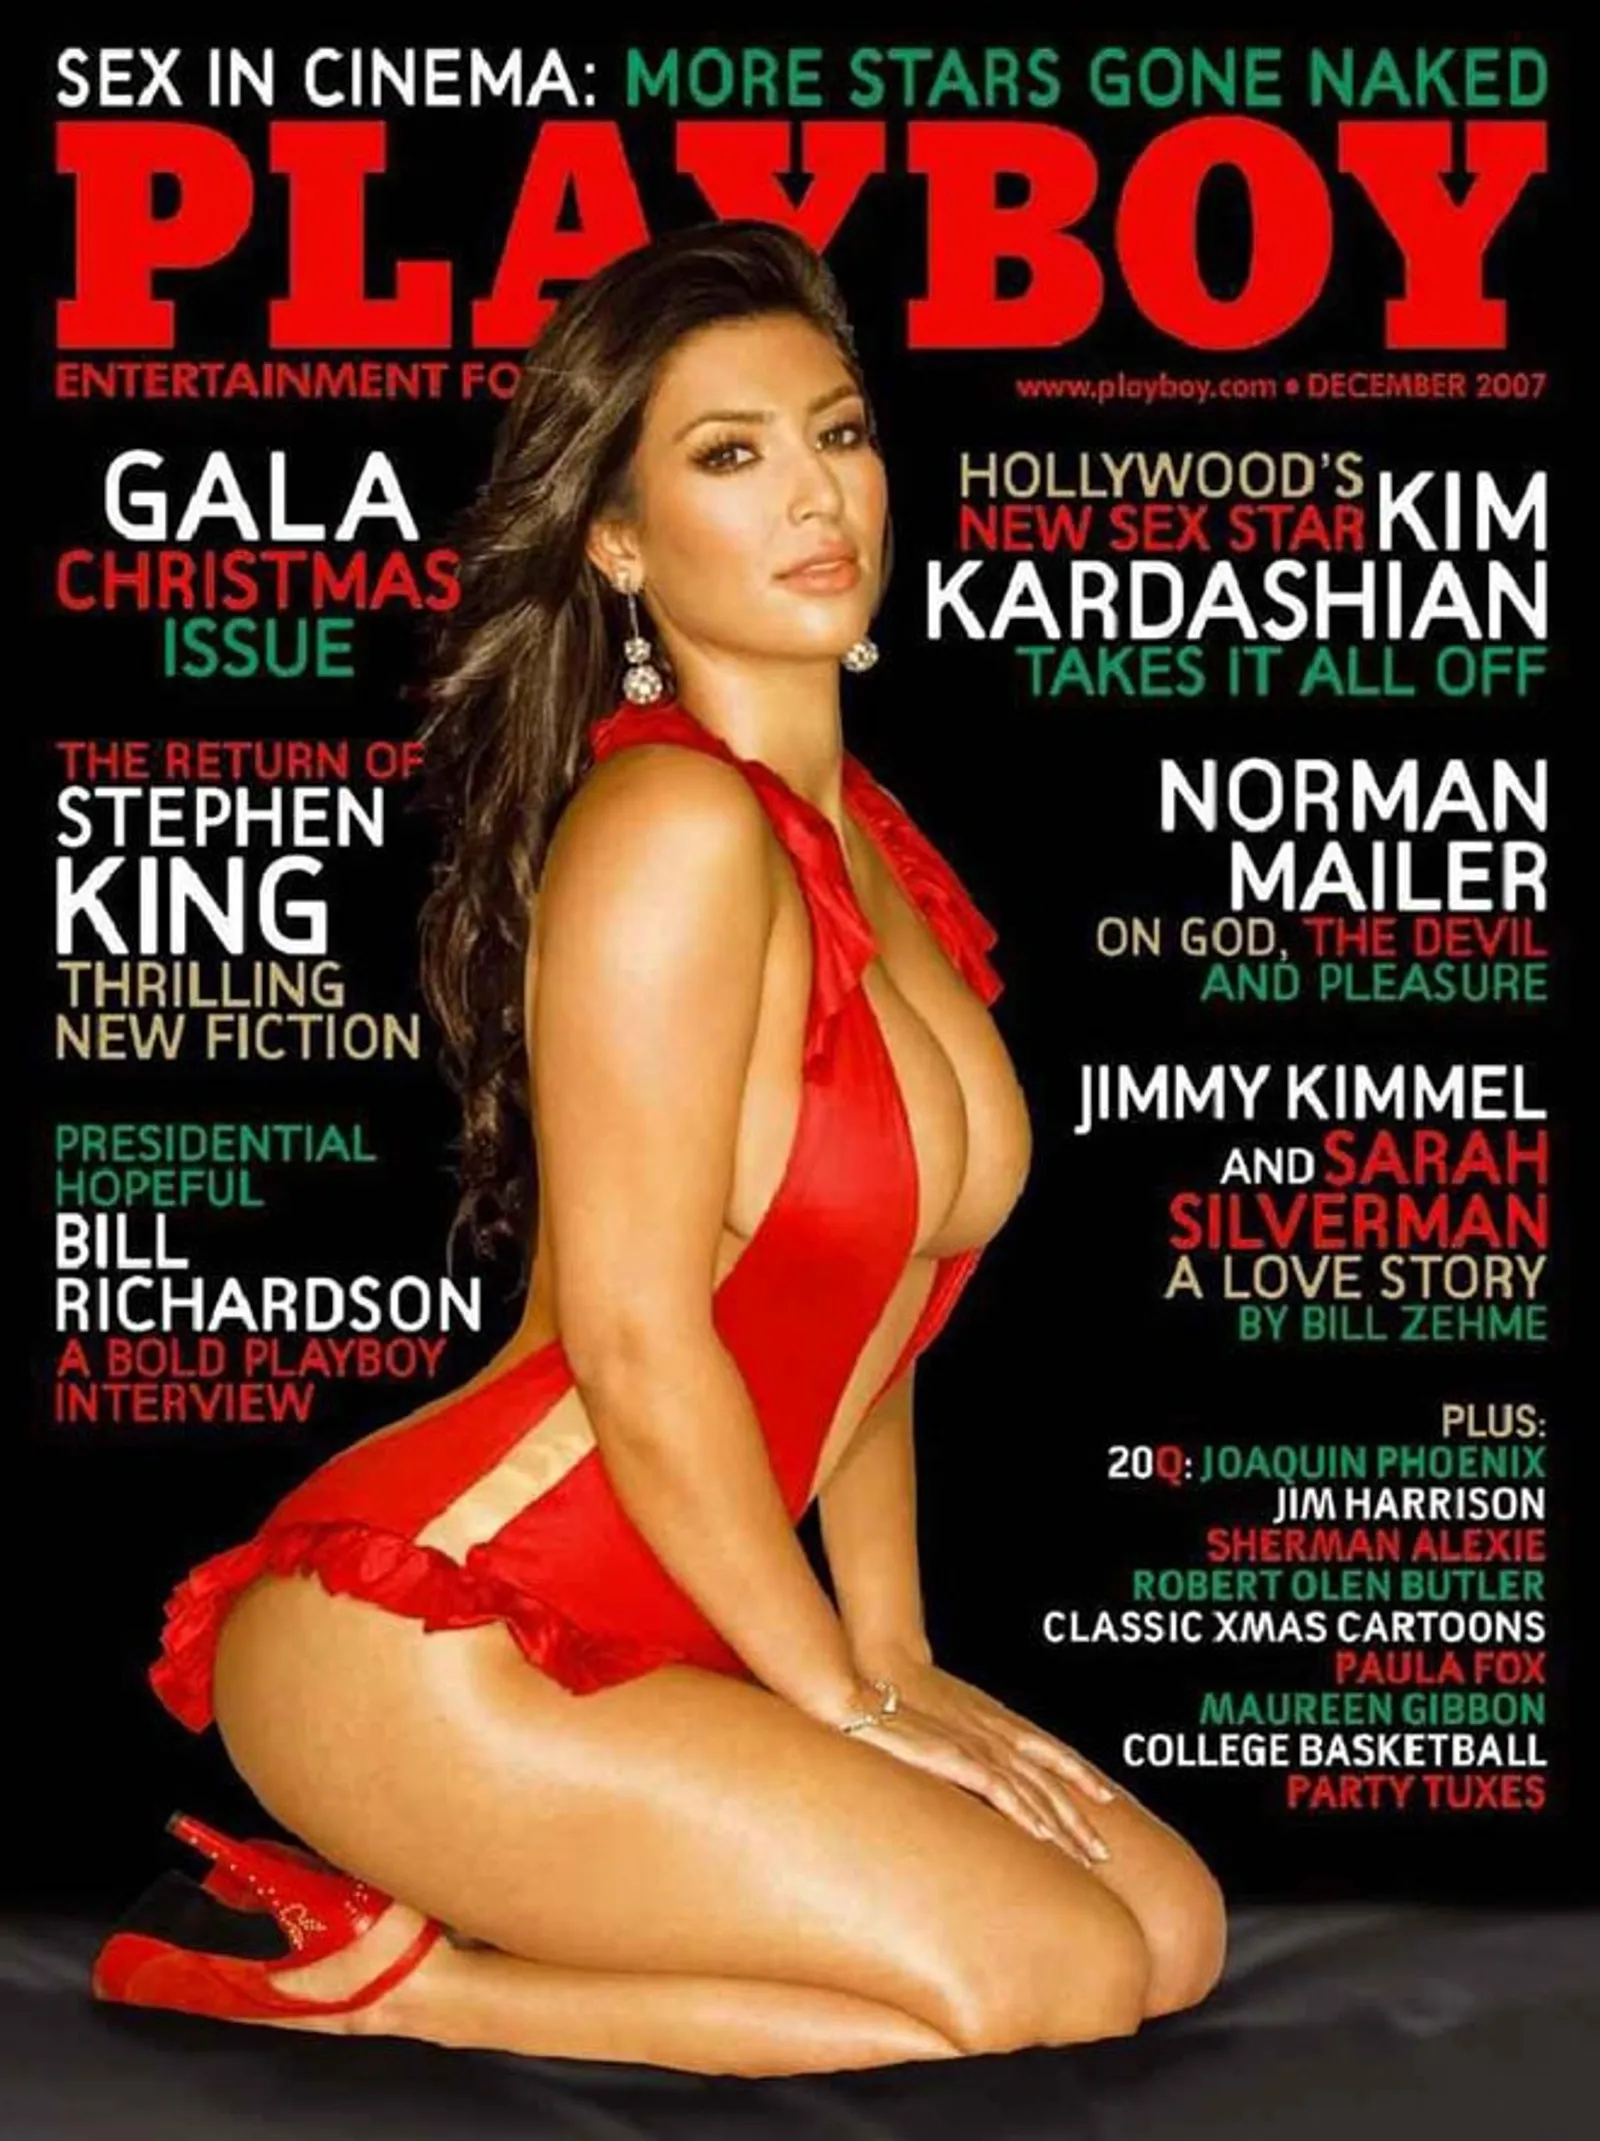 Buat Heboh, Ini 11 Gaya Seksi Kim Kardashian di Pemotretan Majalah